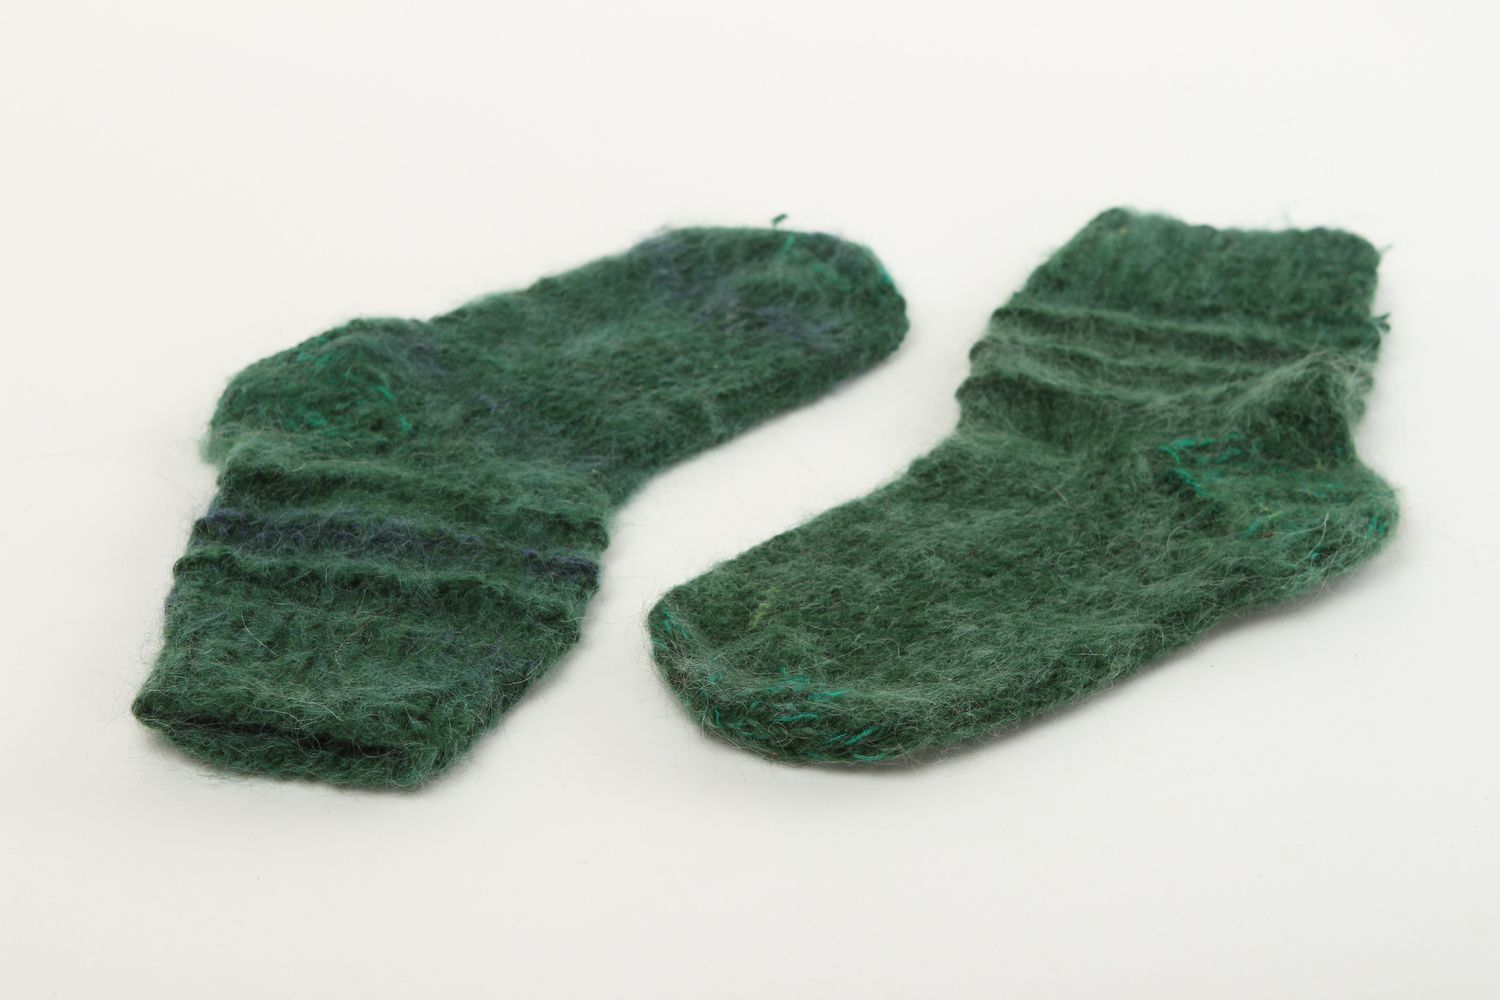 Handmade green woolen socks knitted socks winter clothes Christmas gift ideas photo 3